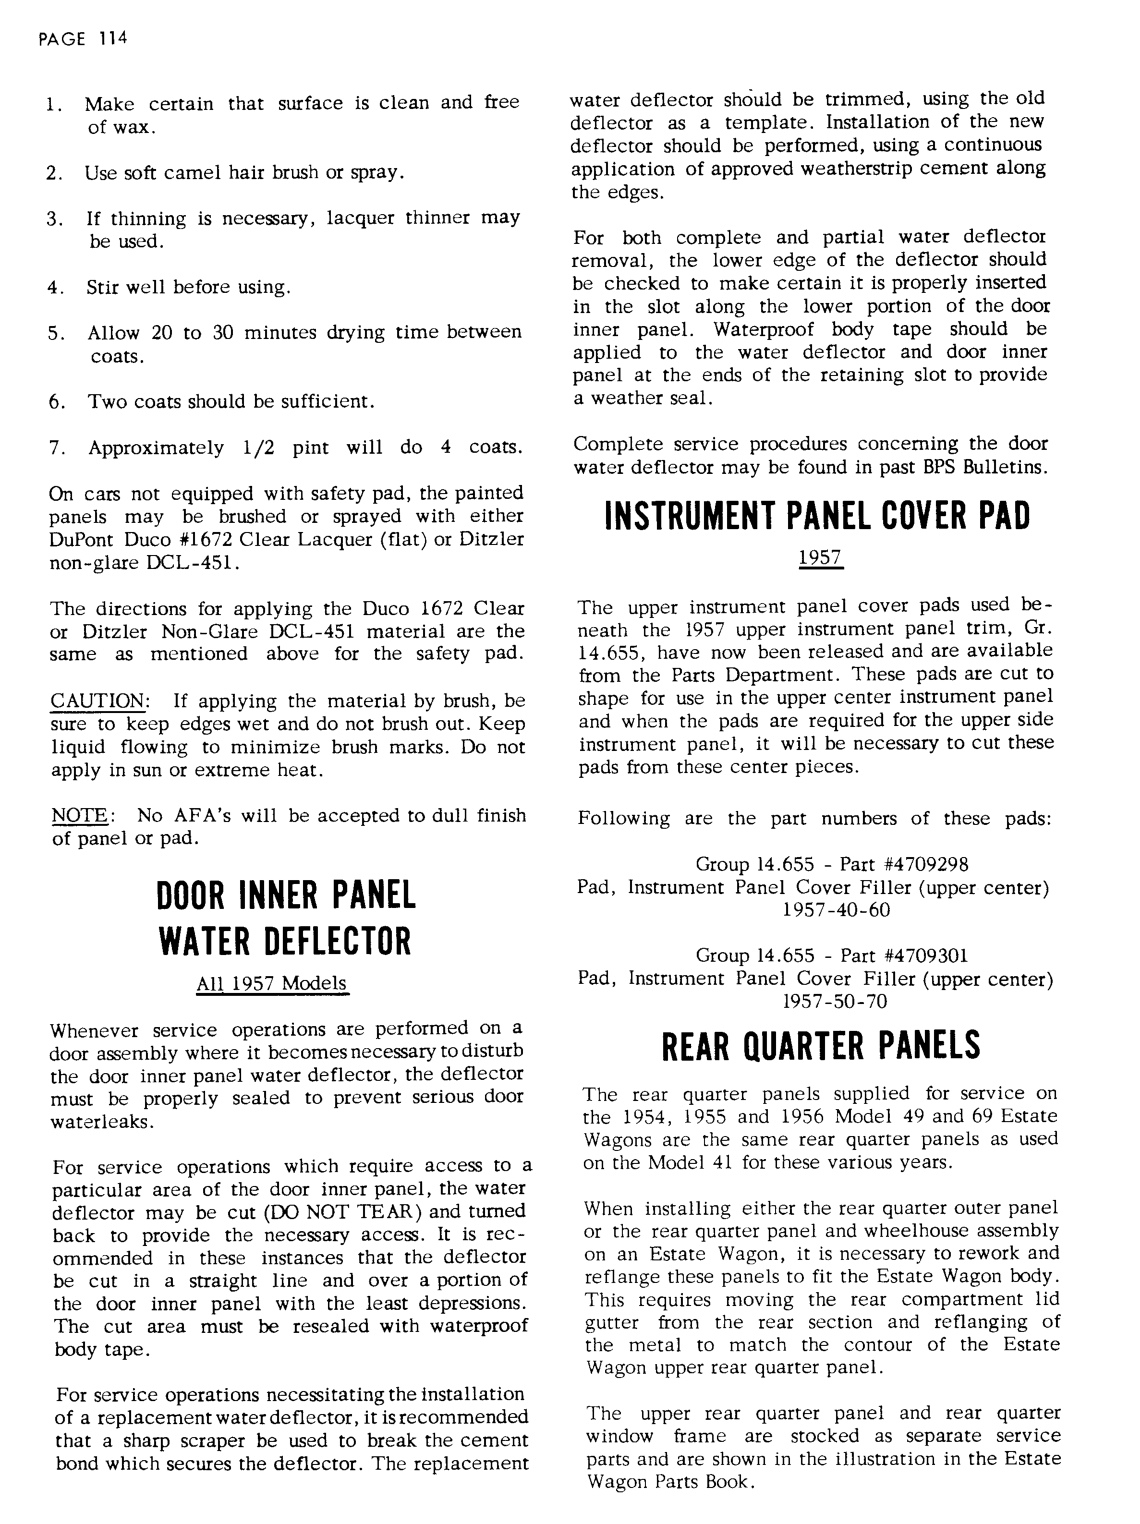 n_1957 Buick Product Service  Bulletins-115-115.jpg